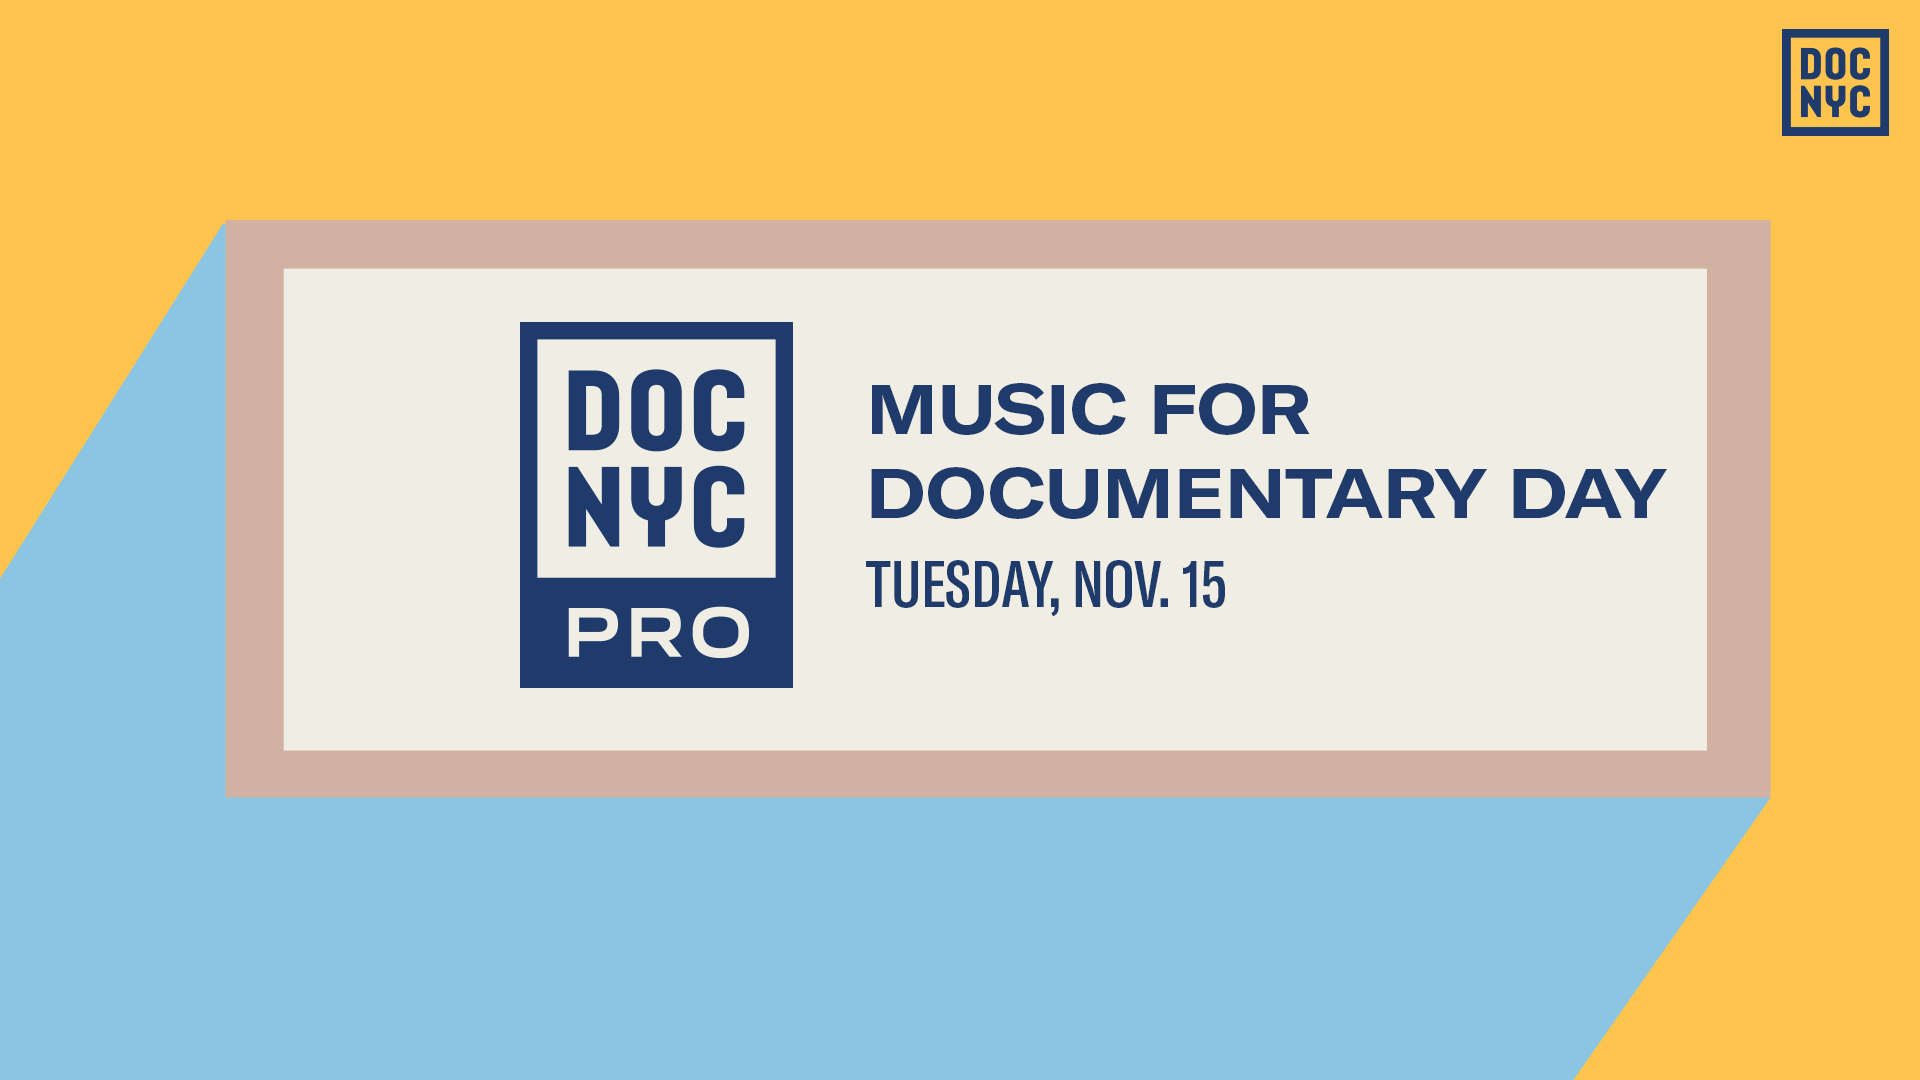 Music for Documentaries Day (Nov. 15)